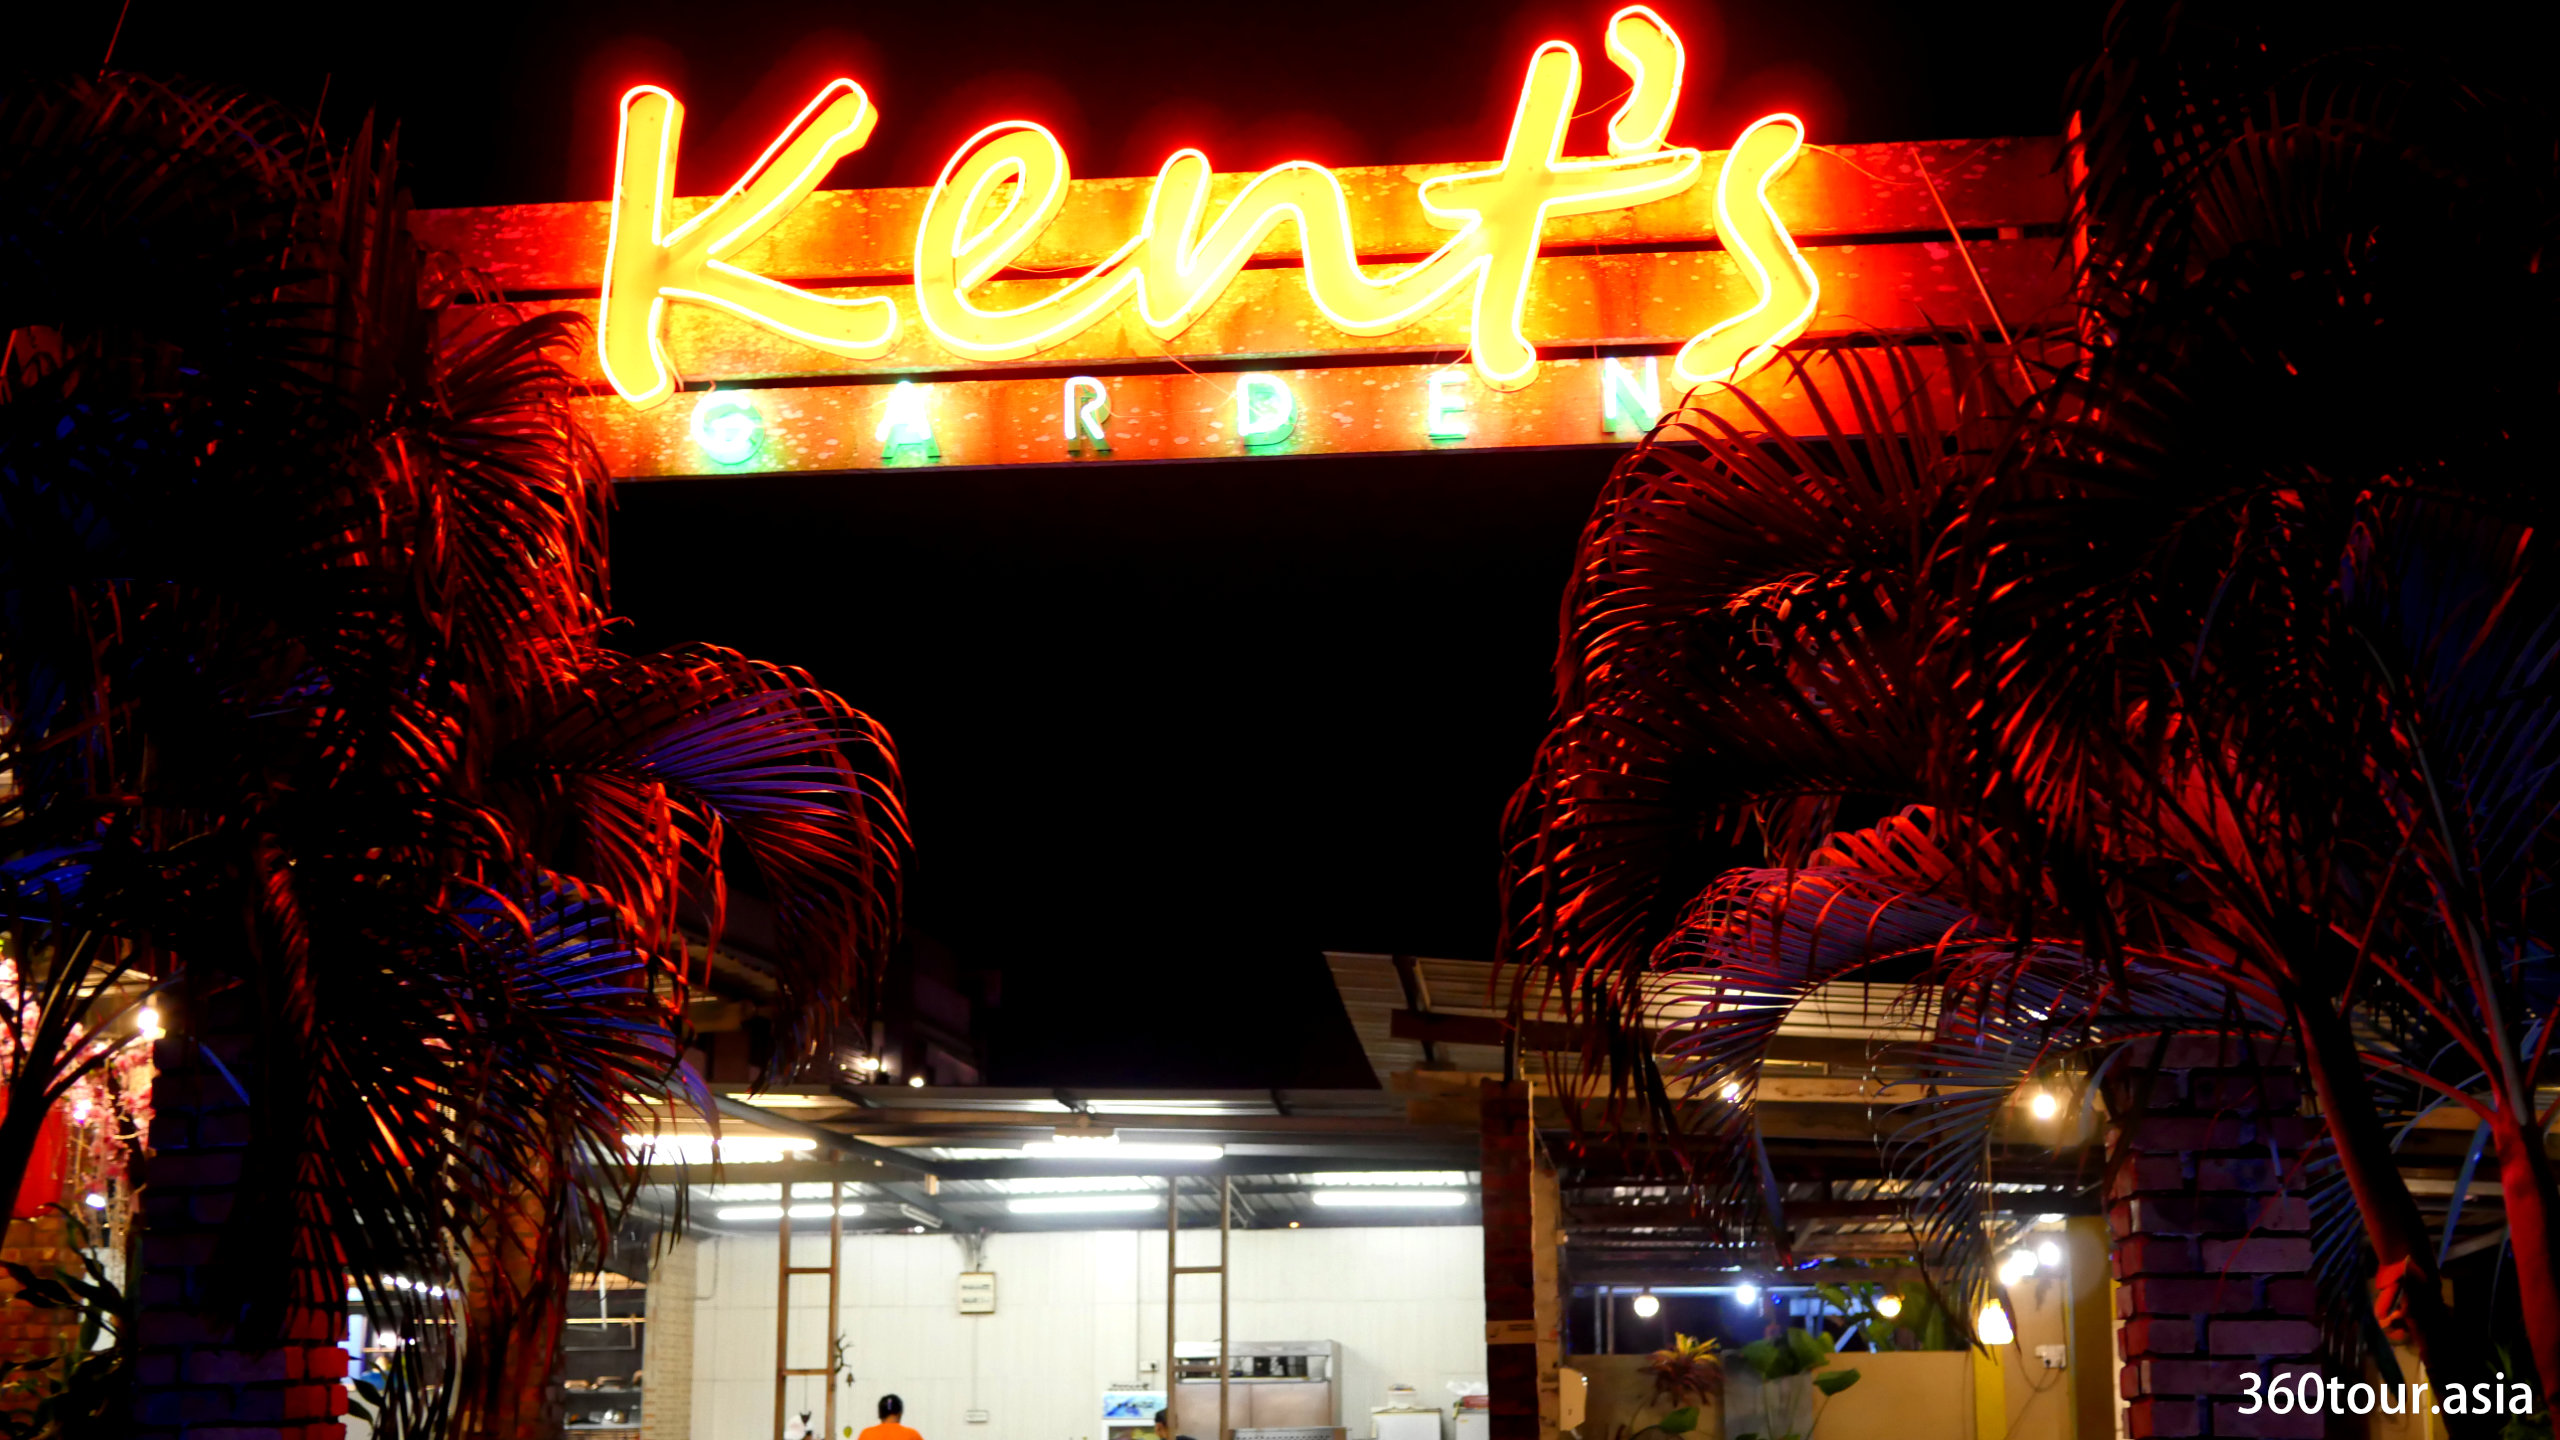 Kent’s Garden Restaurant, Miri City